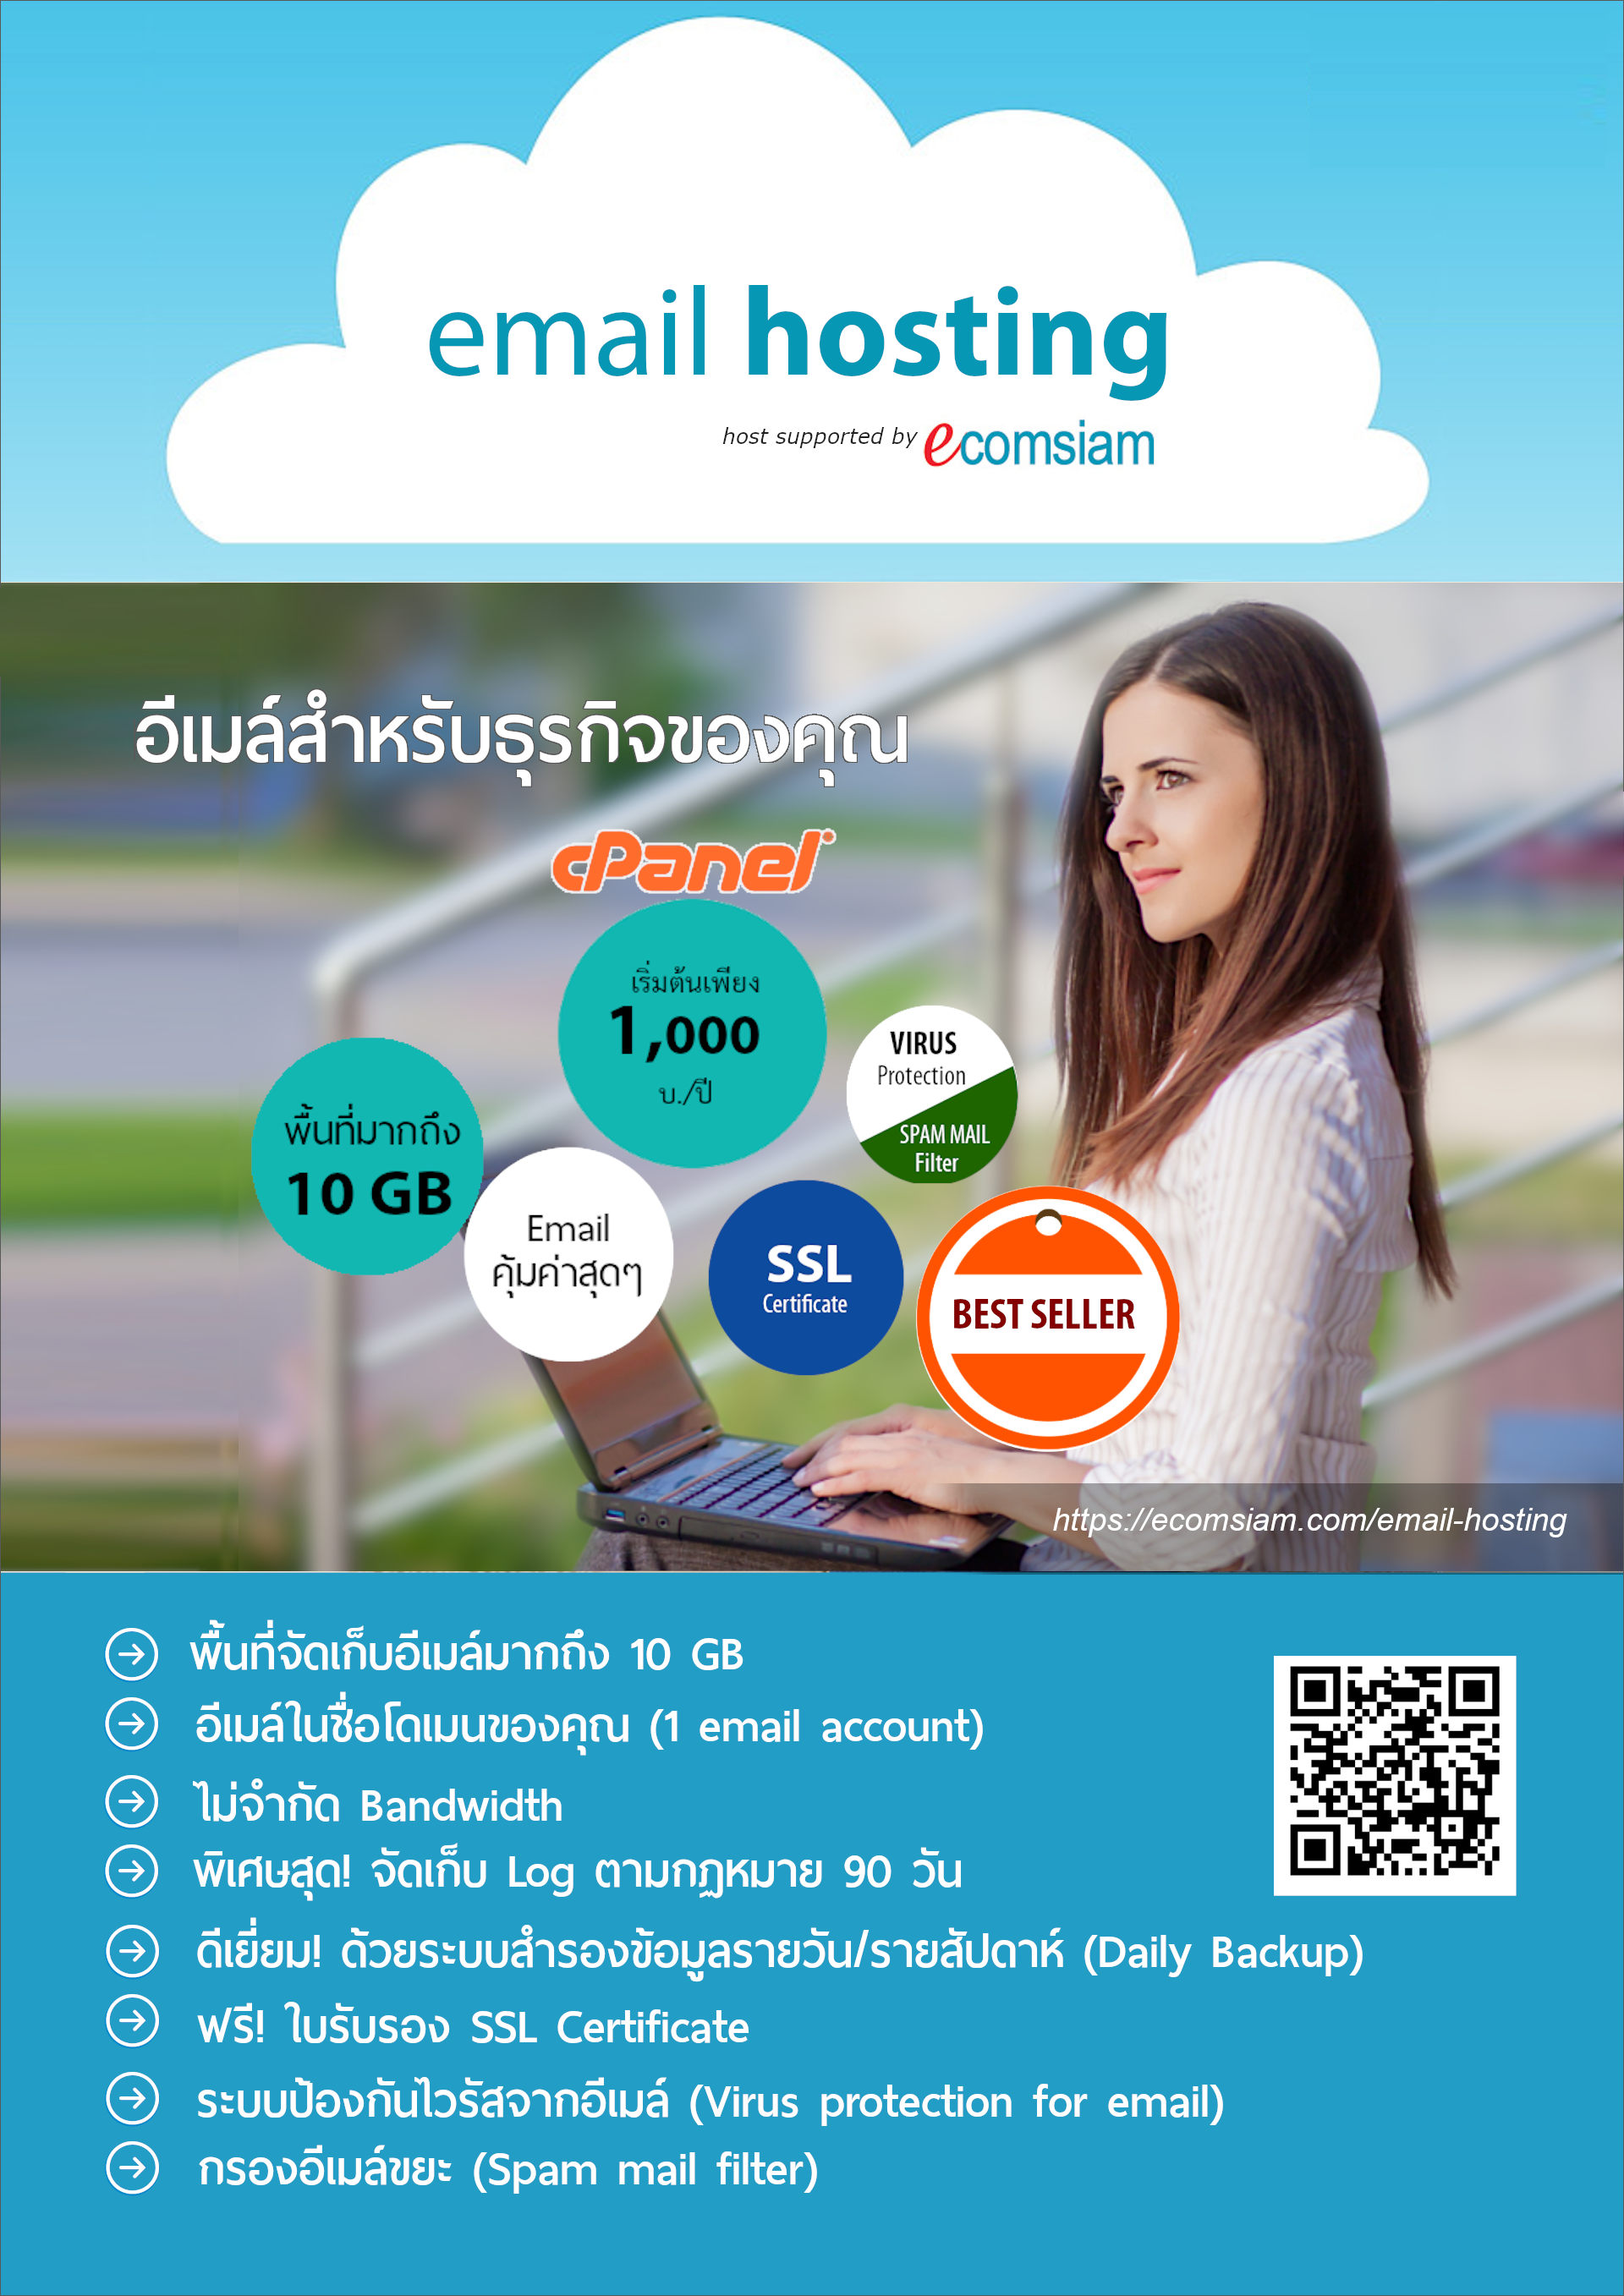 โบรชัวร์แนะนำบริการ  email Hosting thai คุณภาพ บริการดี พื้นที่มาก  คุณภาพสูง  hosting พื้นที่มาก บริการดี  ฟรี SSL ระบบควบคุมจัดการ Web hosting ไทย ด้วย Cpanel ที่ง่าย สะดวก และปลอดภัย hosting เพื่อใช้งานอีเมล์ สำหรับธุรกิจของคุณ มีระบบเก็บ log file ตามกฏหมาย มีความปลอดภัยในการใช้งาน พร้อมมีระบบสำรองข้อมูลรายวัน (daily backup) และ สำรองข้อมูลรายสัปดาห์ (weekly backup) ระบบป้องกันไวรัสจากอีเมล์ (virus protection) พร้อมระบบกรองสแปมส์เมล์หรือกรองอีเมล์ขยะ (Spammail filter) เริ่มต้นเพียง 1000 บาทต่อปี   พื้นที่ 10 GB 1 email สอบถามรายละเอียดเพิ่มเติม  โทร.หาเราตอนนี้เลย  02-9682665 หรือ line : @ecomsiam โฮสติ้งคุณภาพ บริการลูกค้าดี ดูแลดี  แนะนำเว็บโฮสติ้ง โดย webhosting.com.co.th